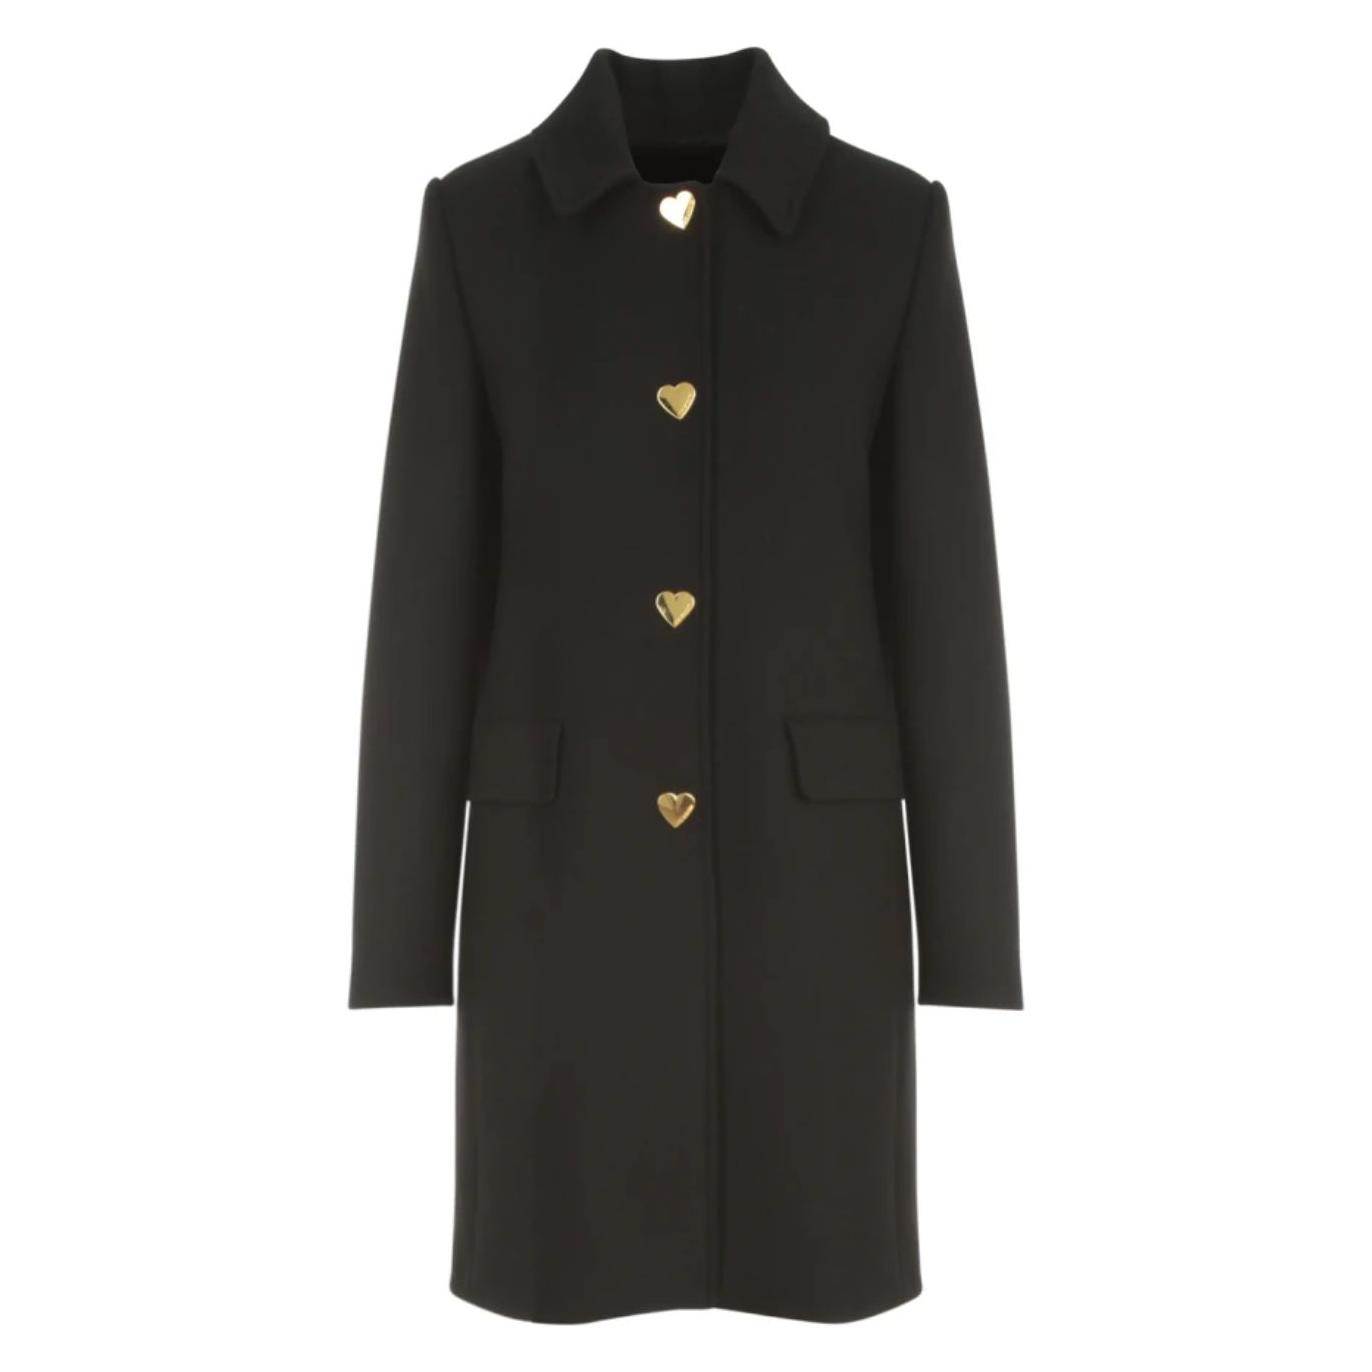 Love Moschino Elegant Wool Blend Coat with Heart Buttons elegant-black-wool-coat-with-heart-buttons product-6965-776980004-1-0577e70d-3e5.jpg